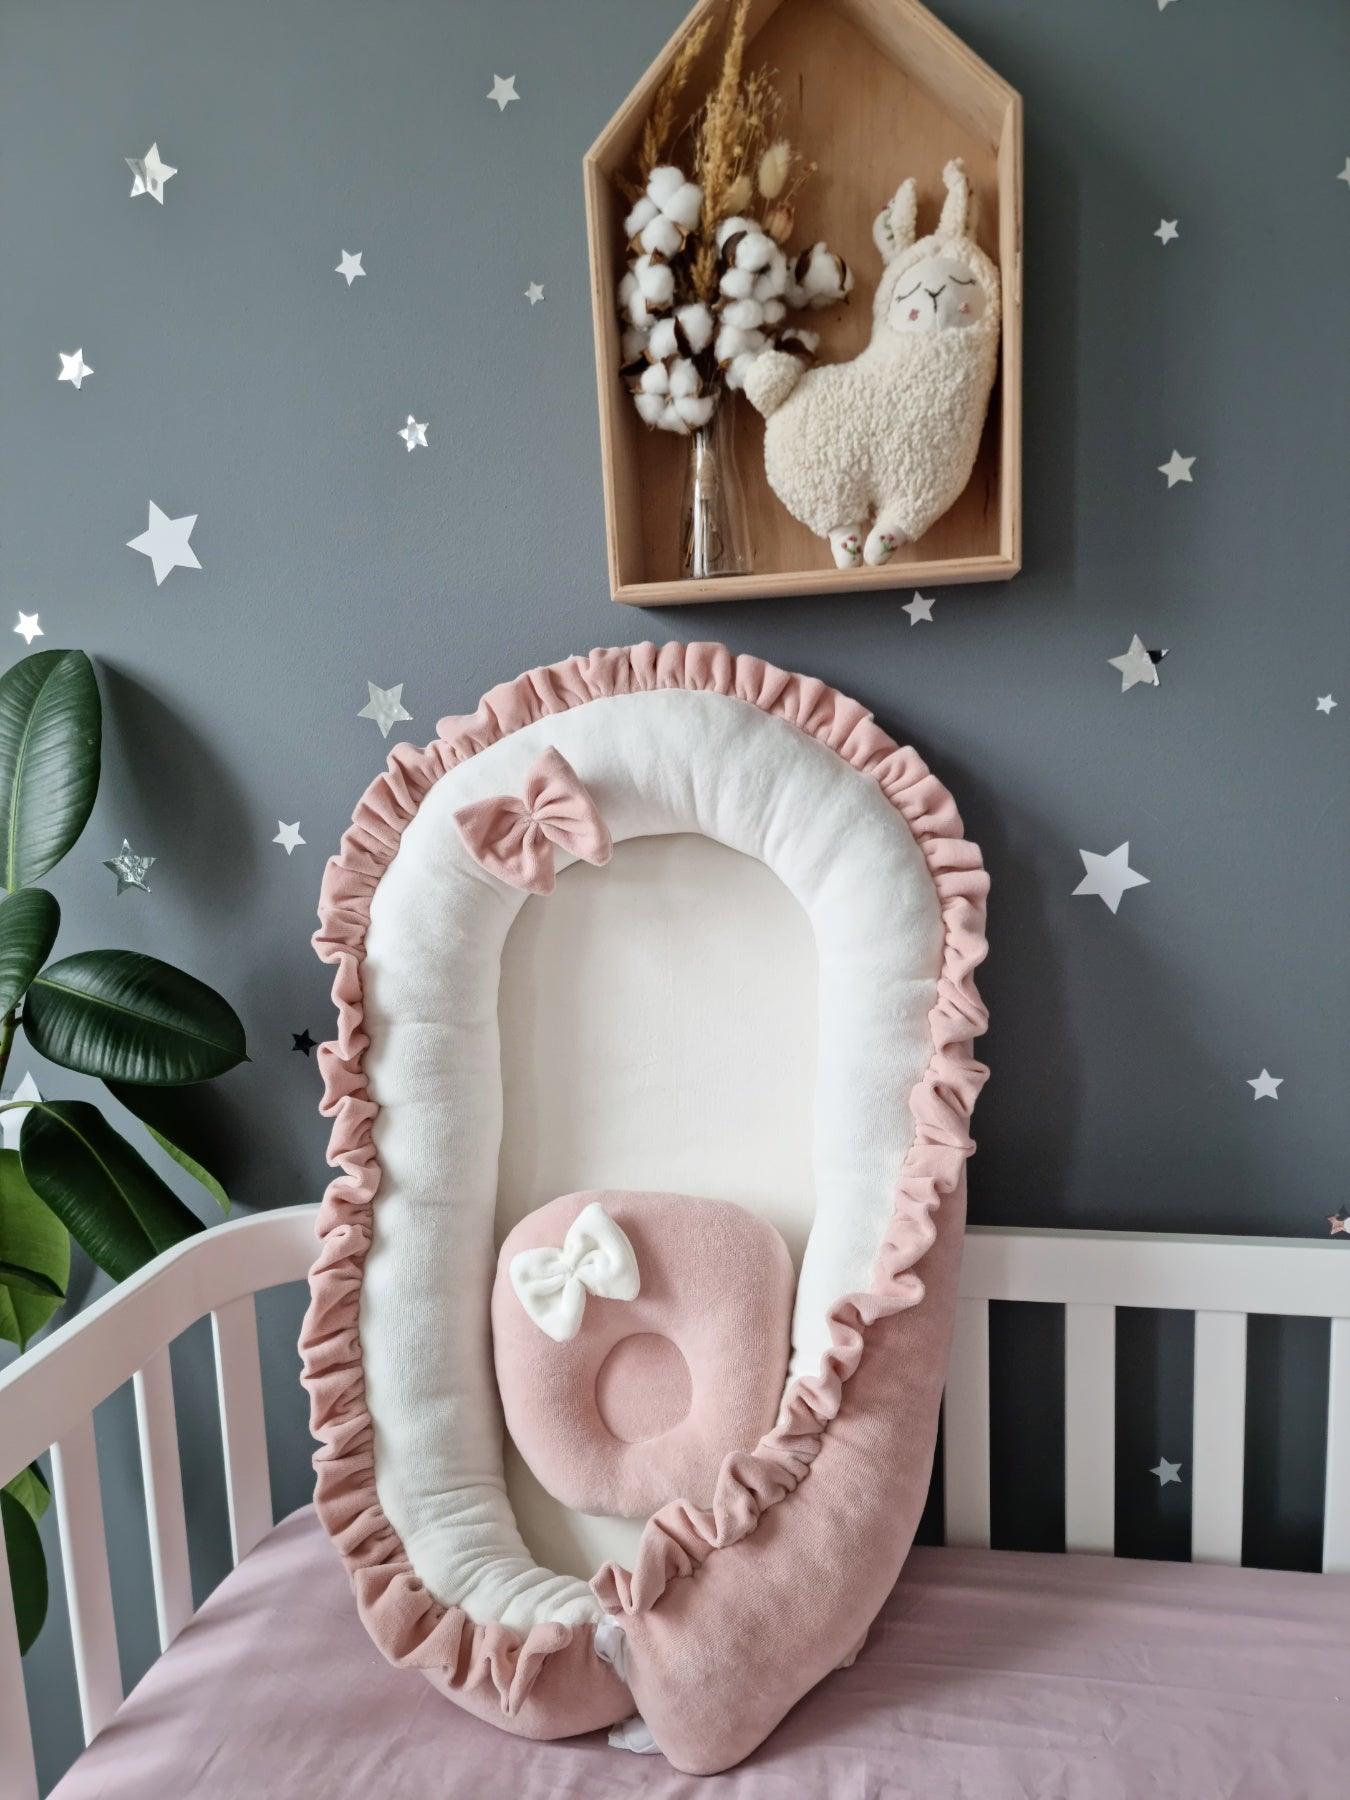 Personalized baby bedding set for girl blush pink. Braided crib bumper - KariStudio